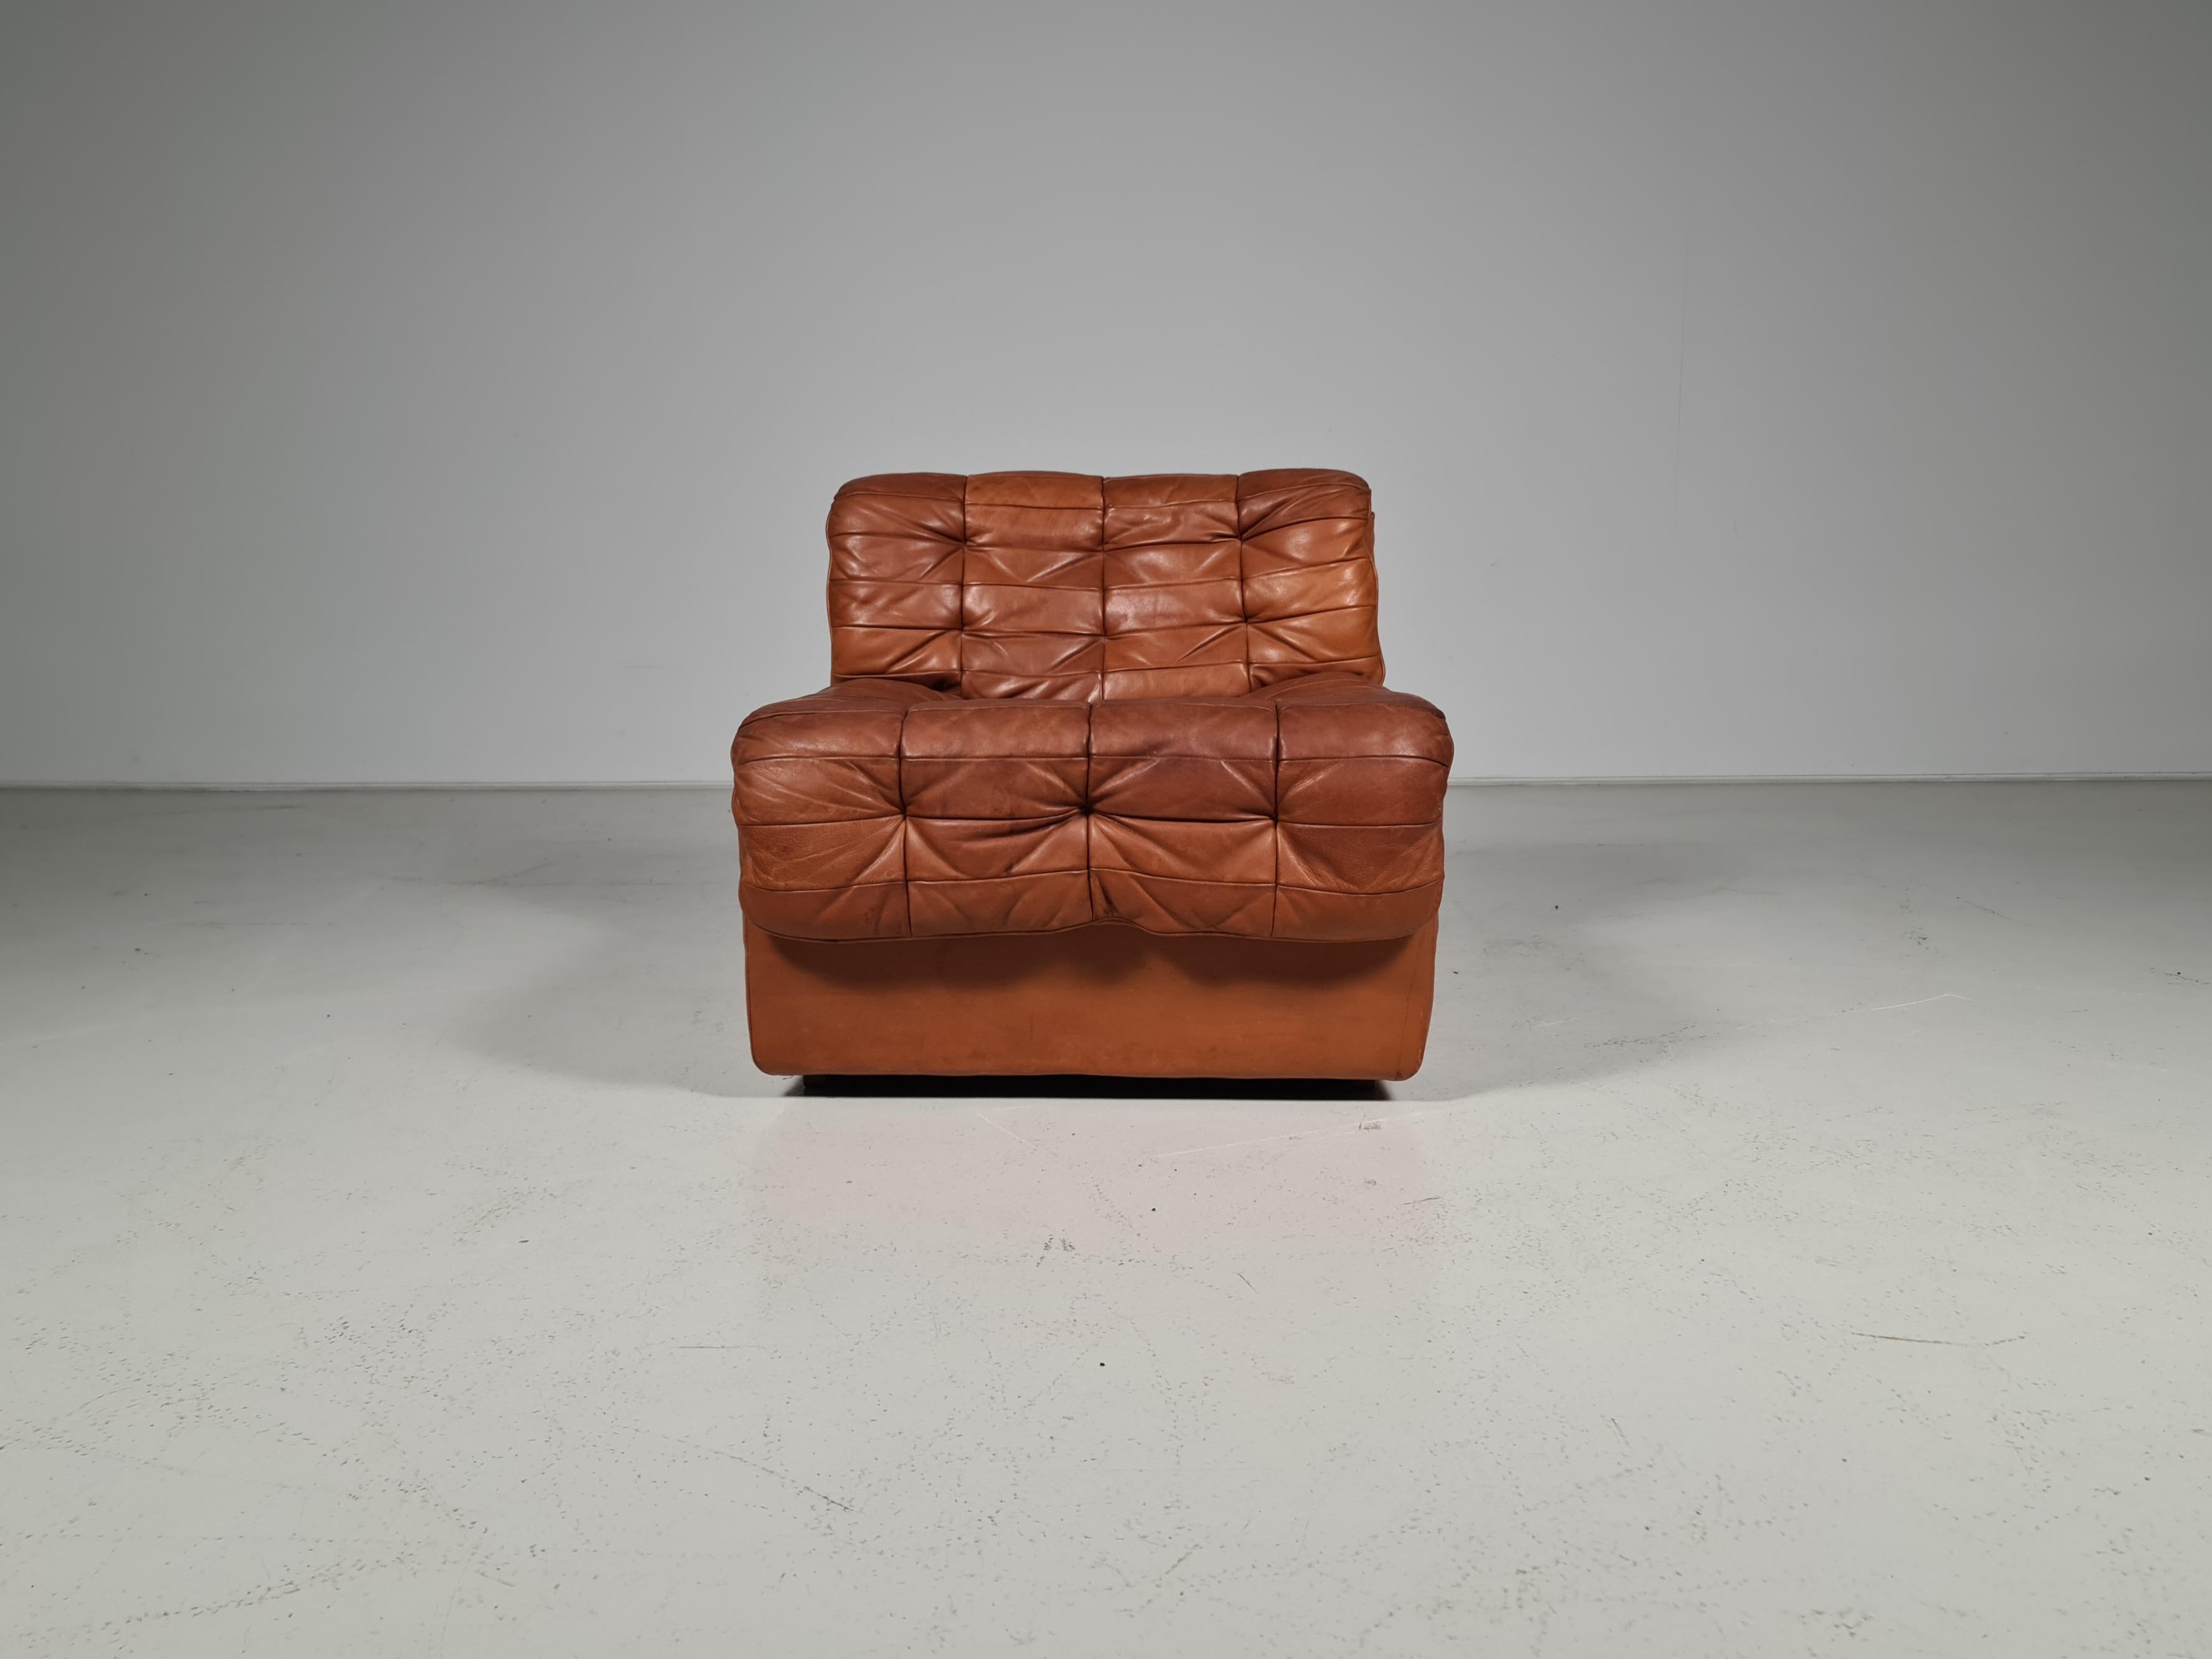 Cognac leather patchwork De Sede DS11 chair, Switzerland, 1970s. Amazing patina.
 